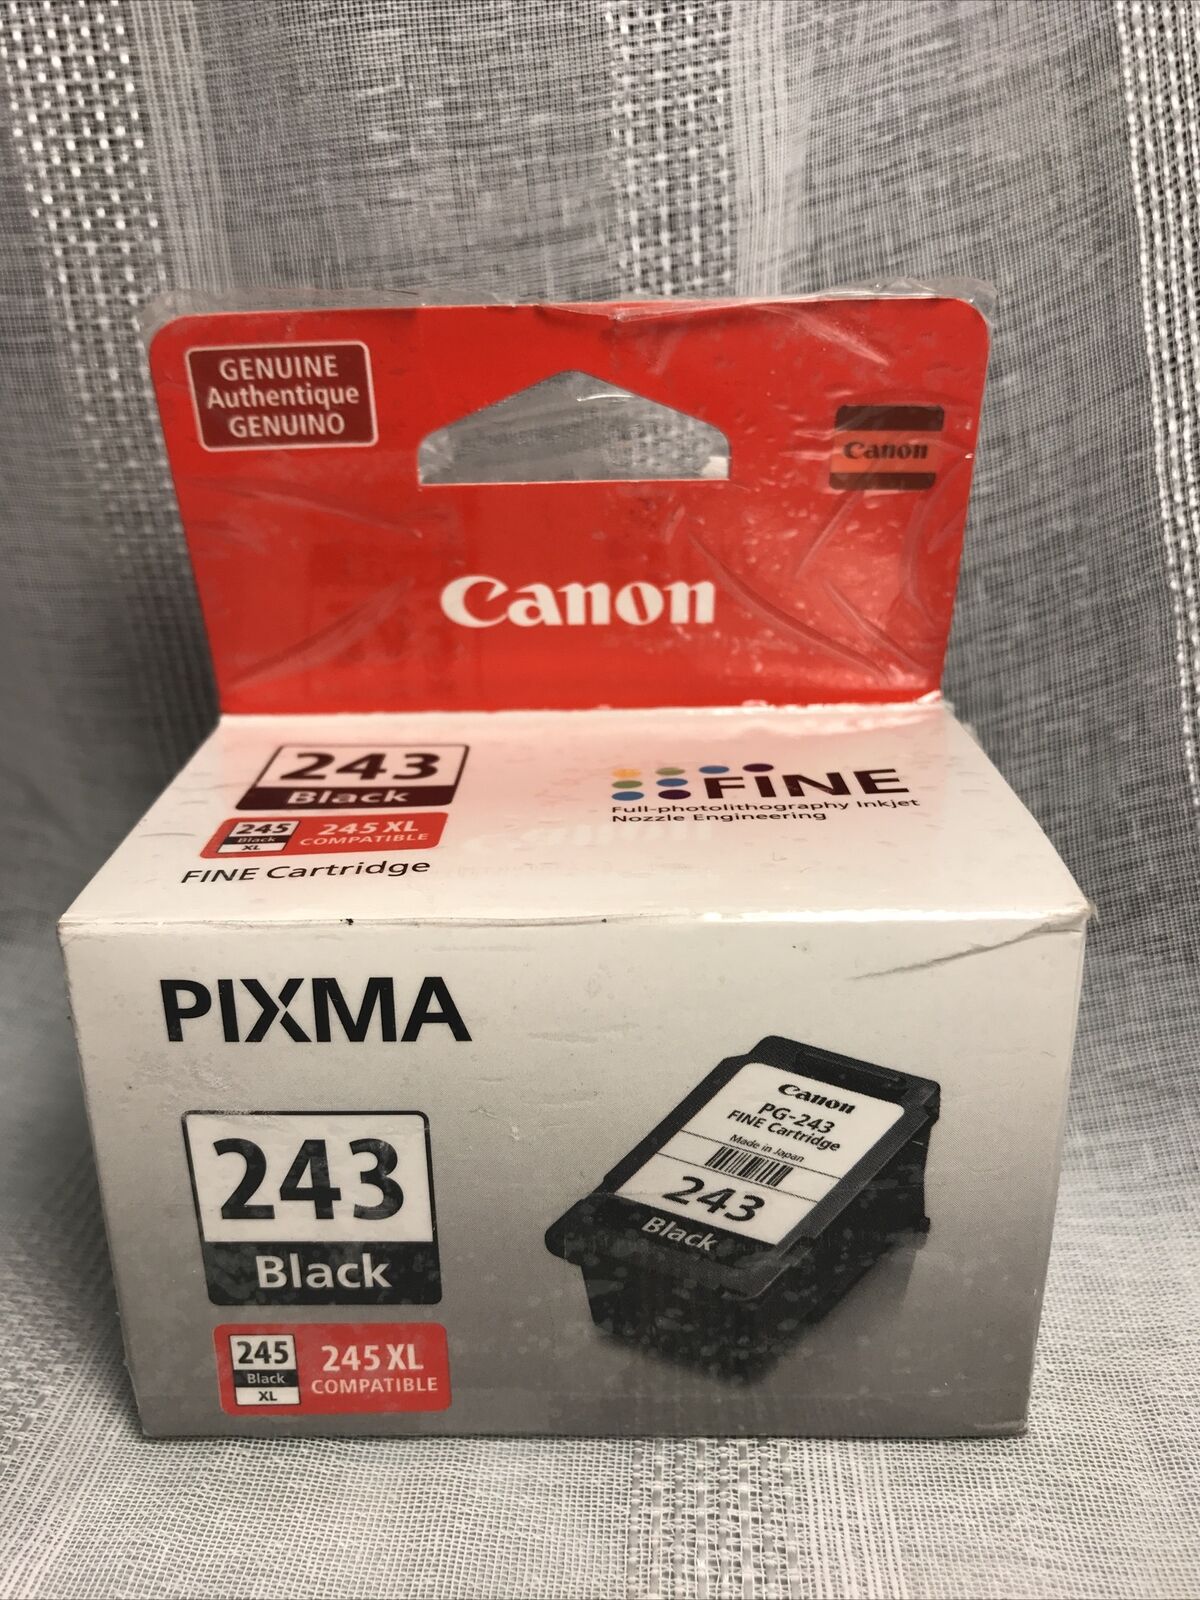 Canon 1287C004 Pixma 243 Black Fine Ink Cartridge Black Ink Sale